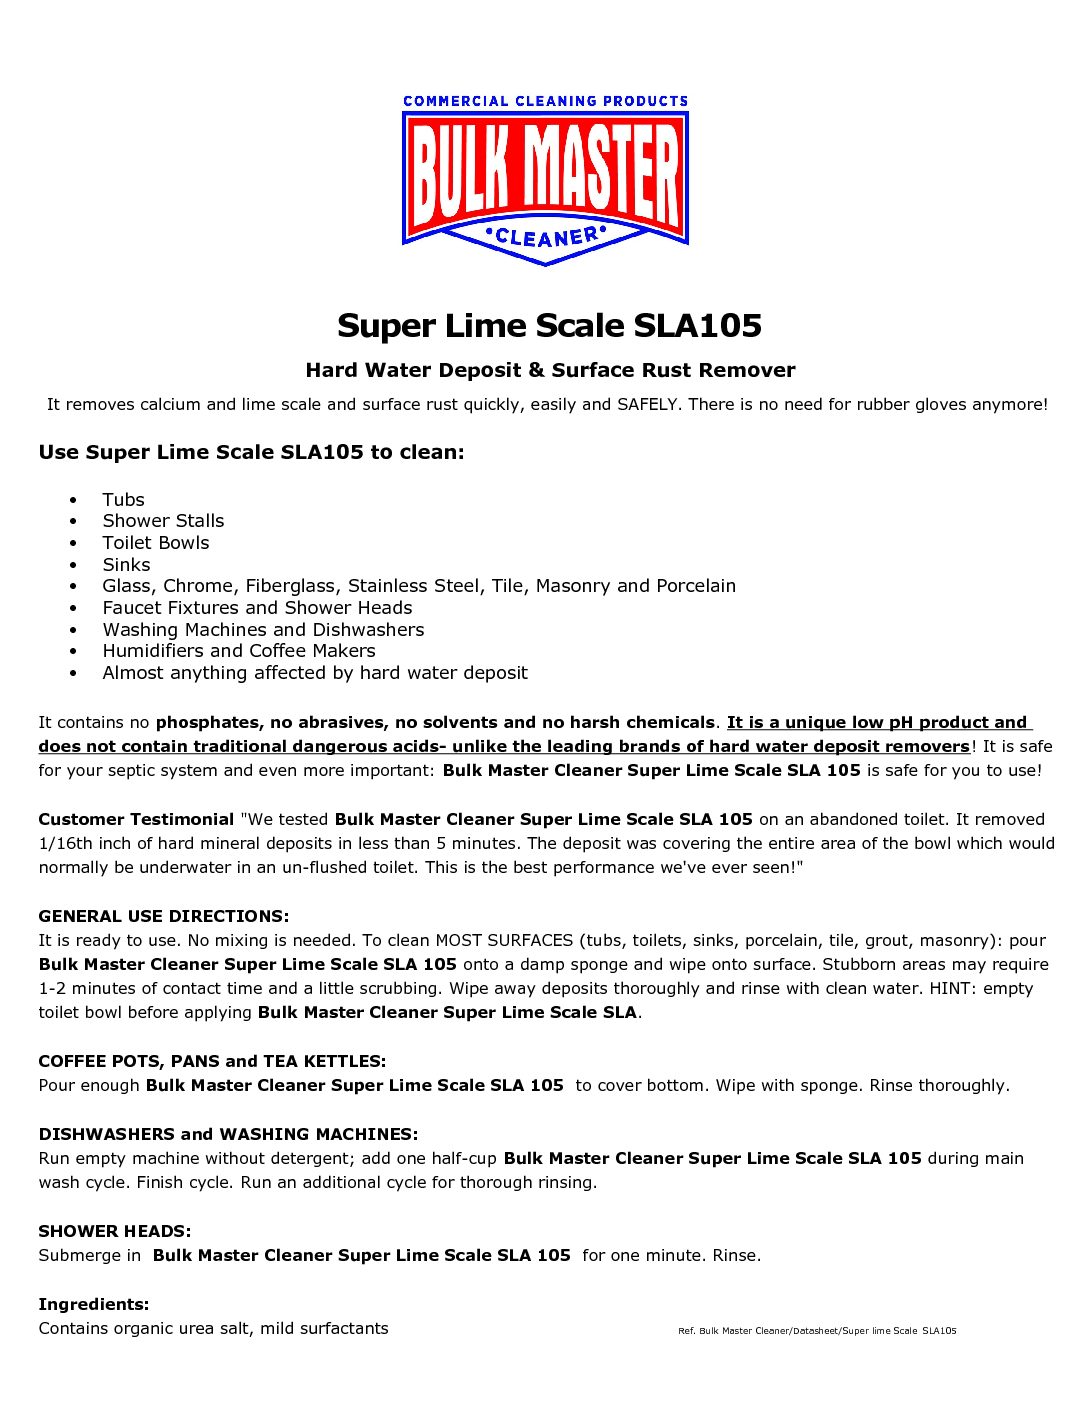 Bulk Master Cleaner Super Lime Scale SLA105 pdf